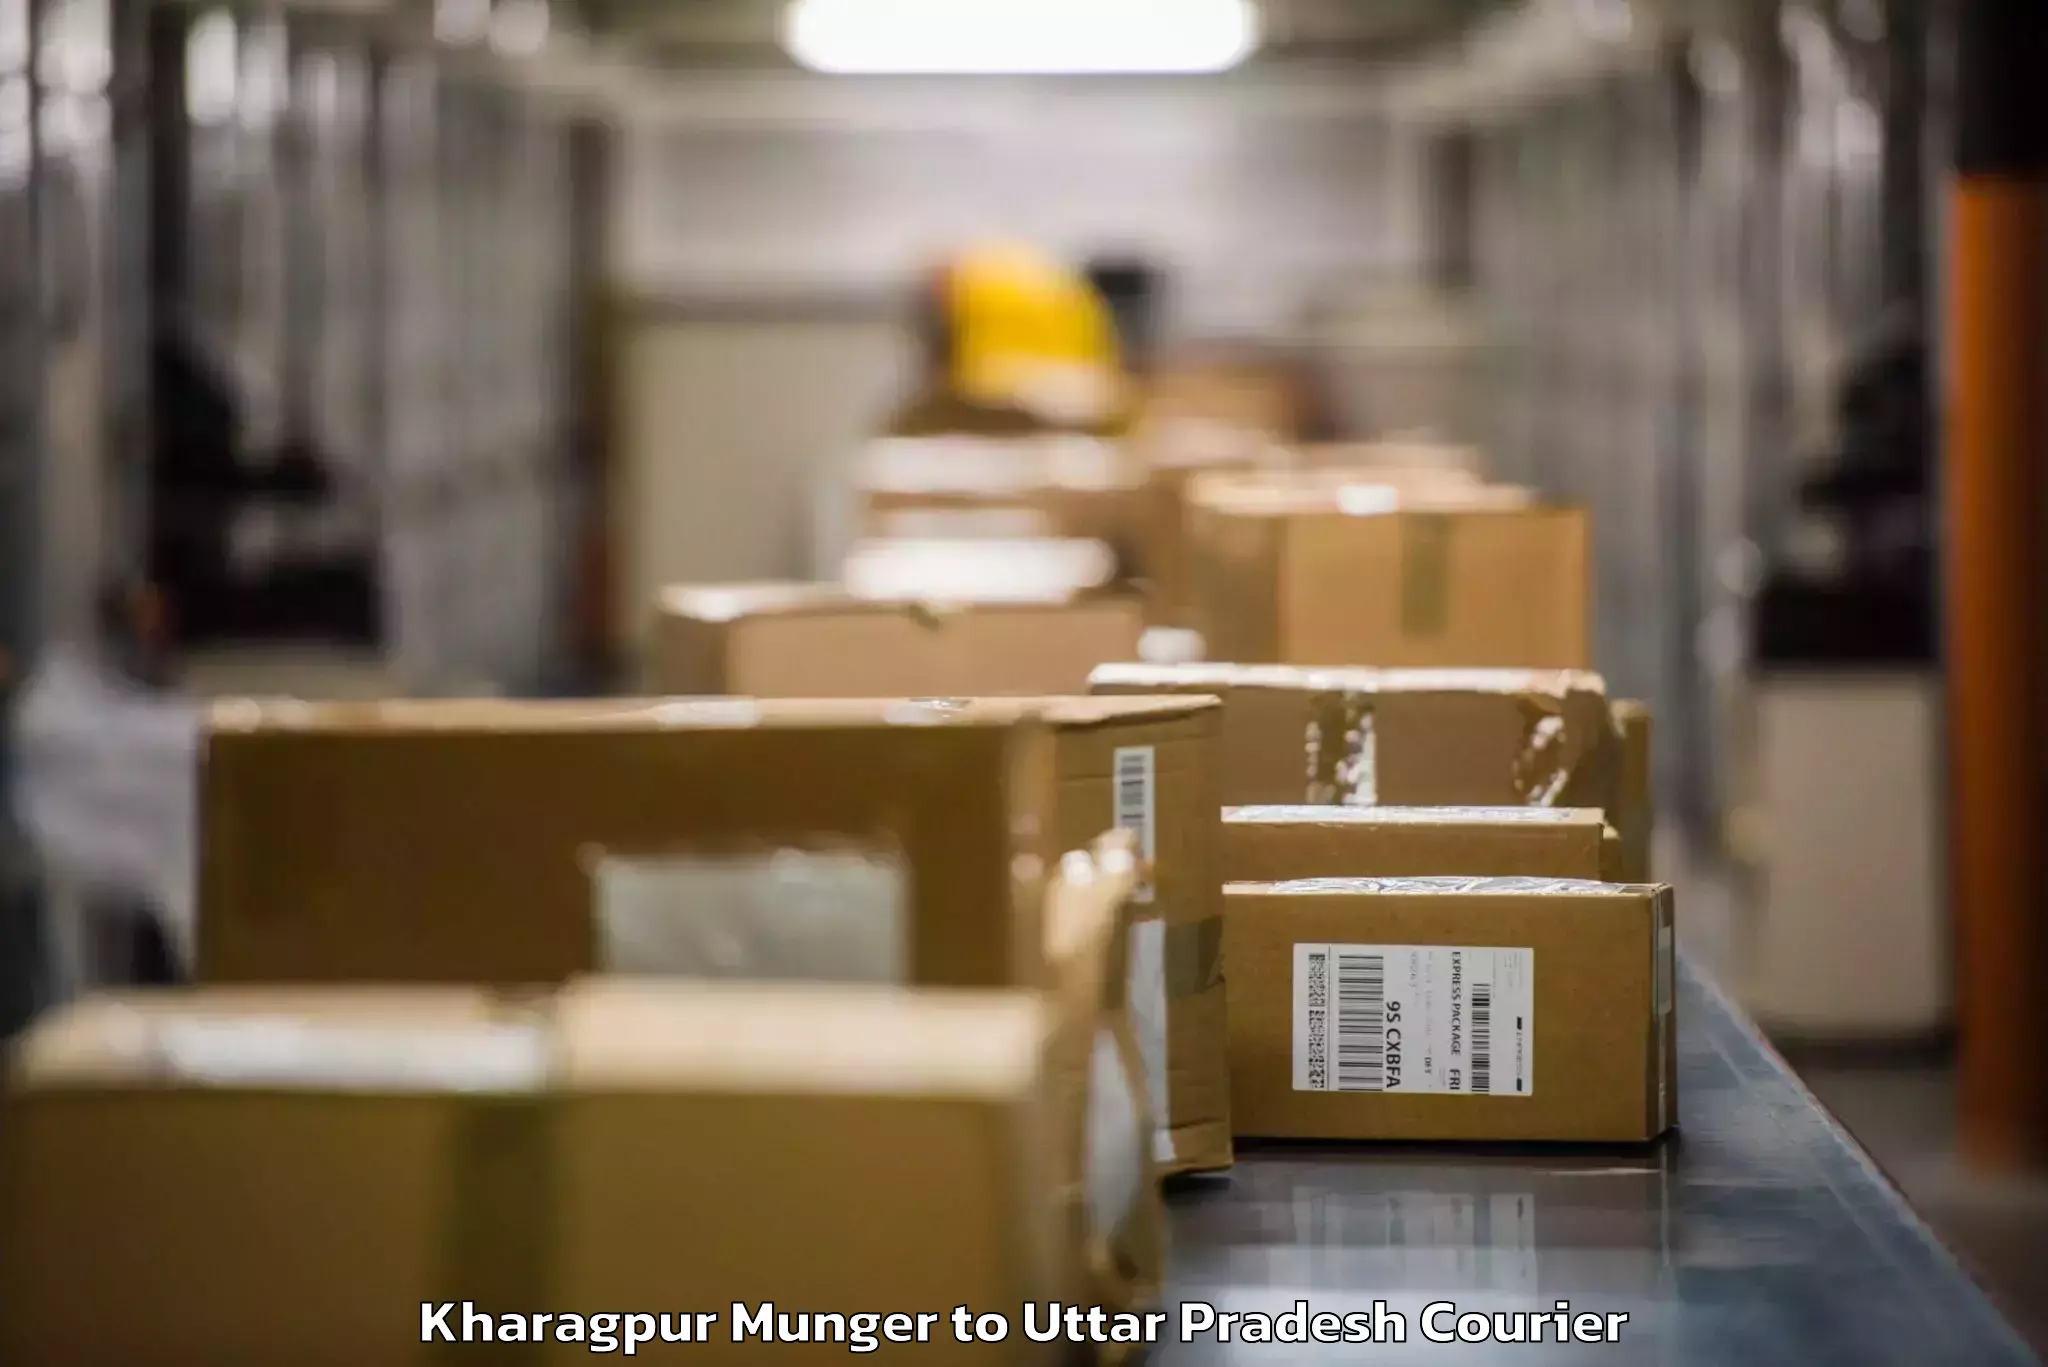 Luggage transport service Kharagpur Munger to Aligarh